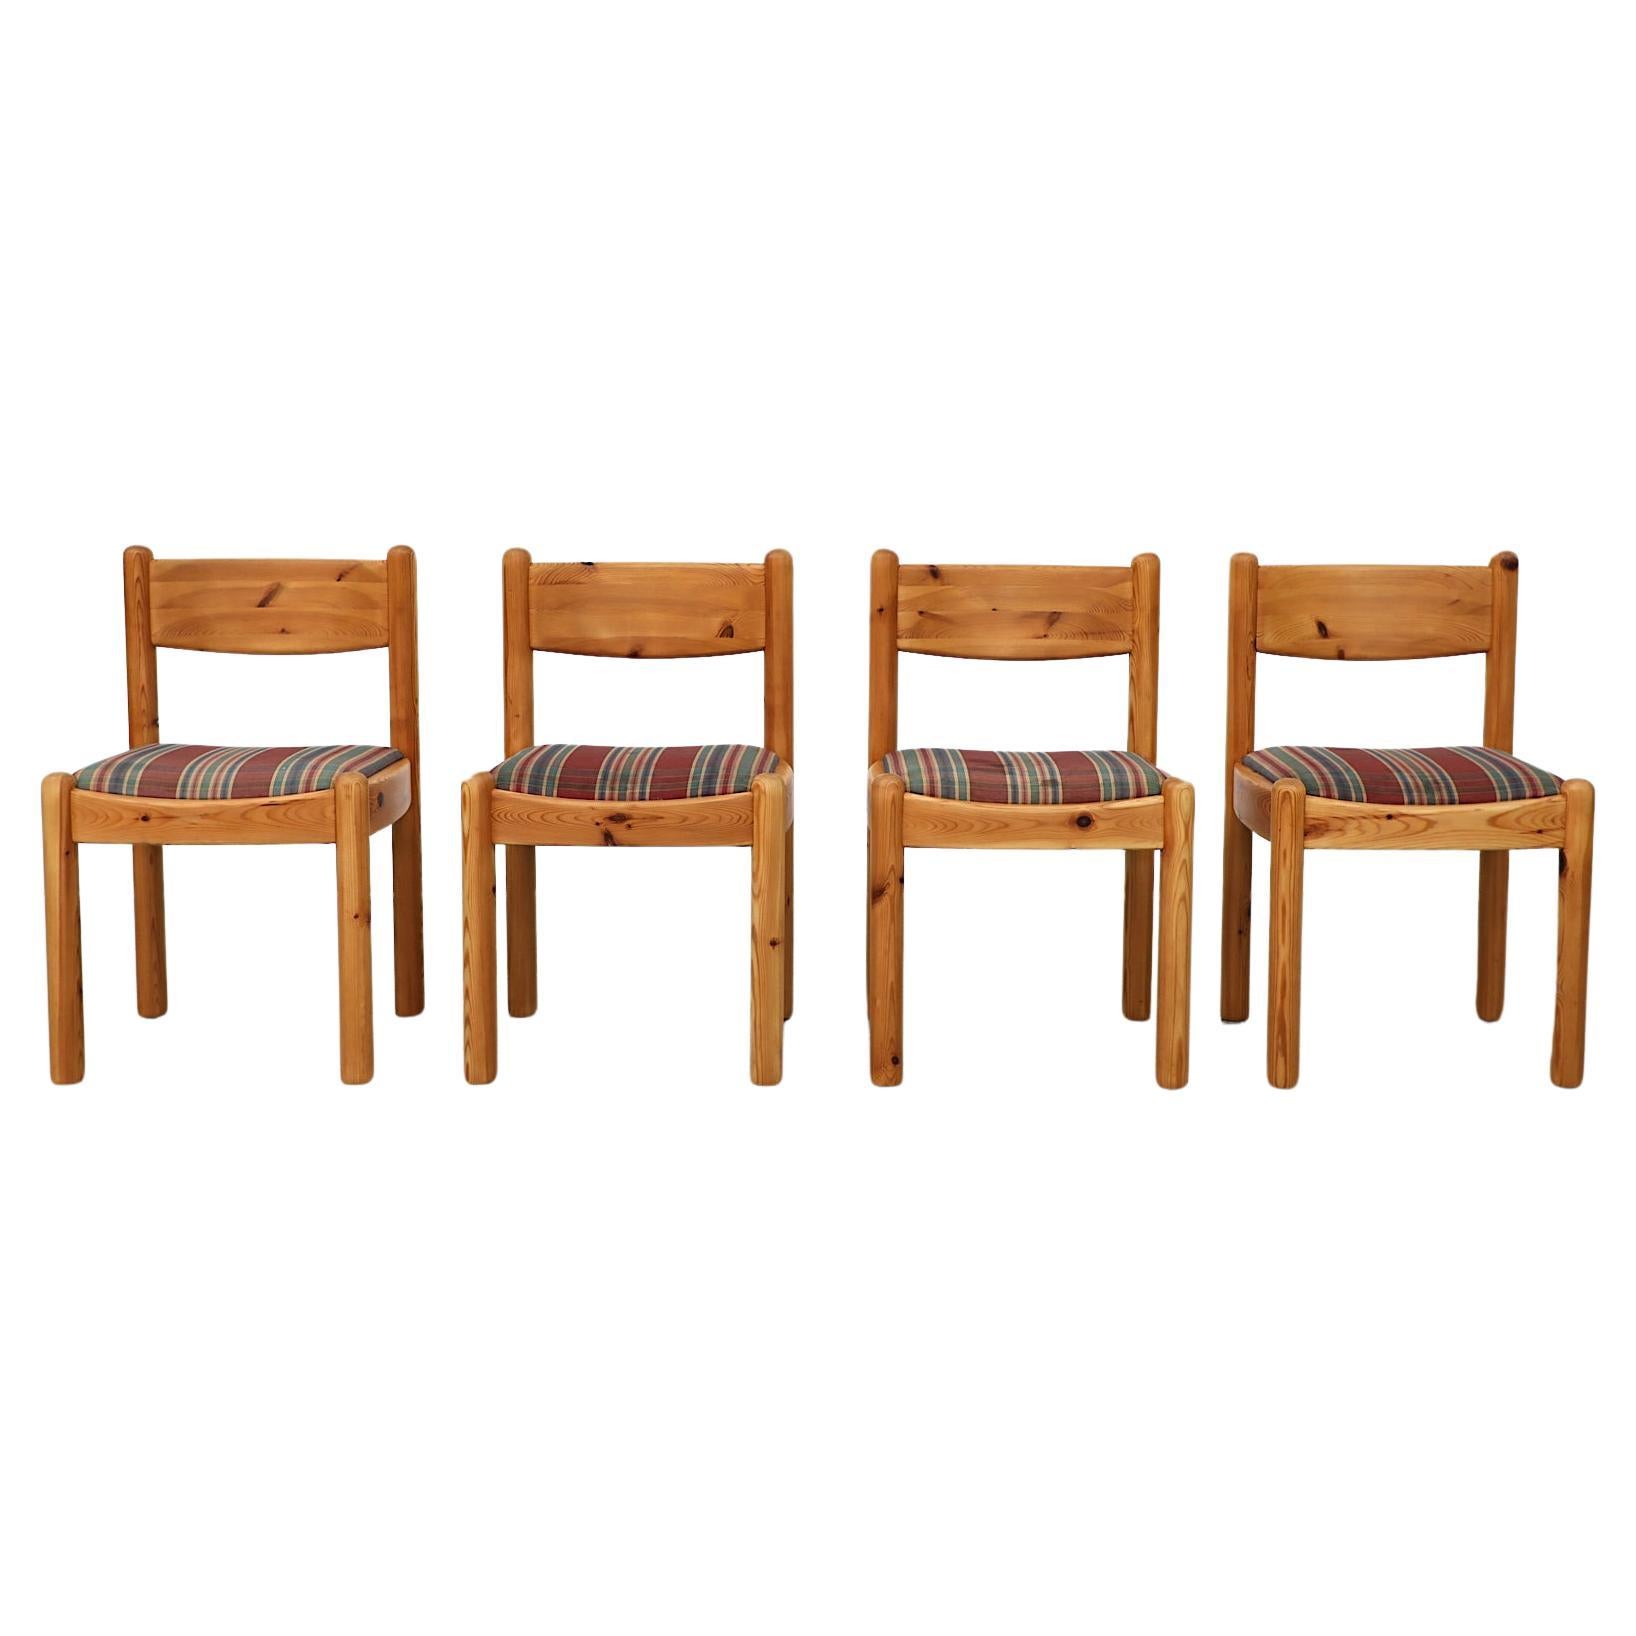 Set of 4 Ate van Apeldoorn Style Pine Dining Chairs w/ Round Legs & Plaid Seats